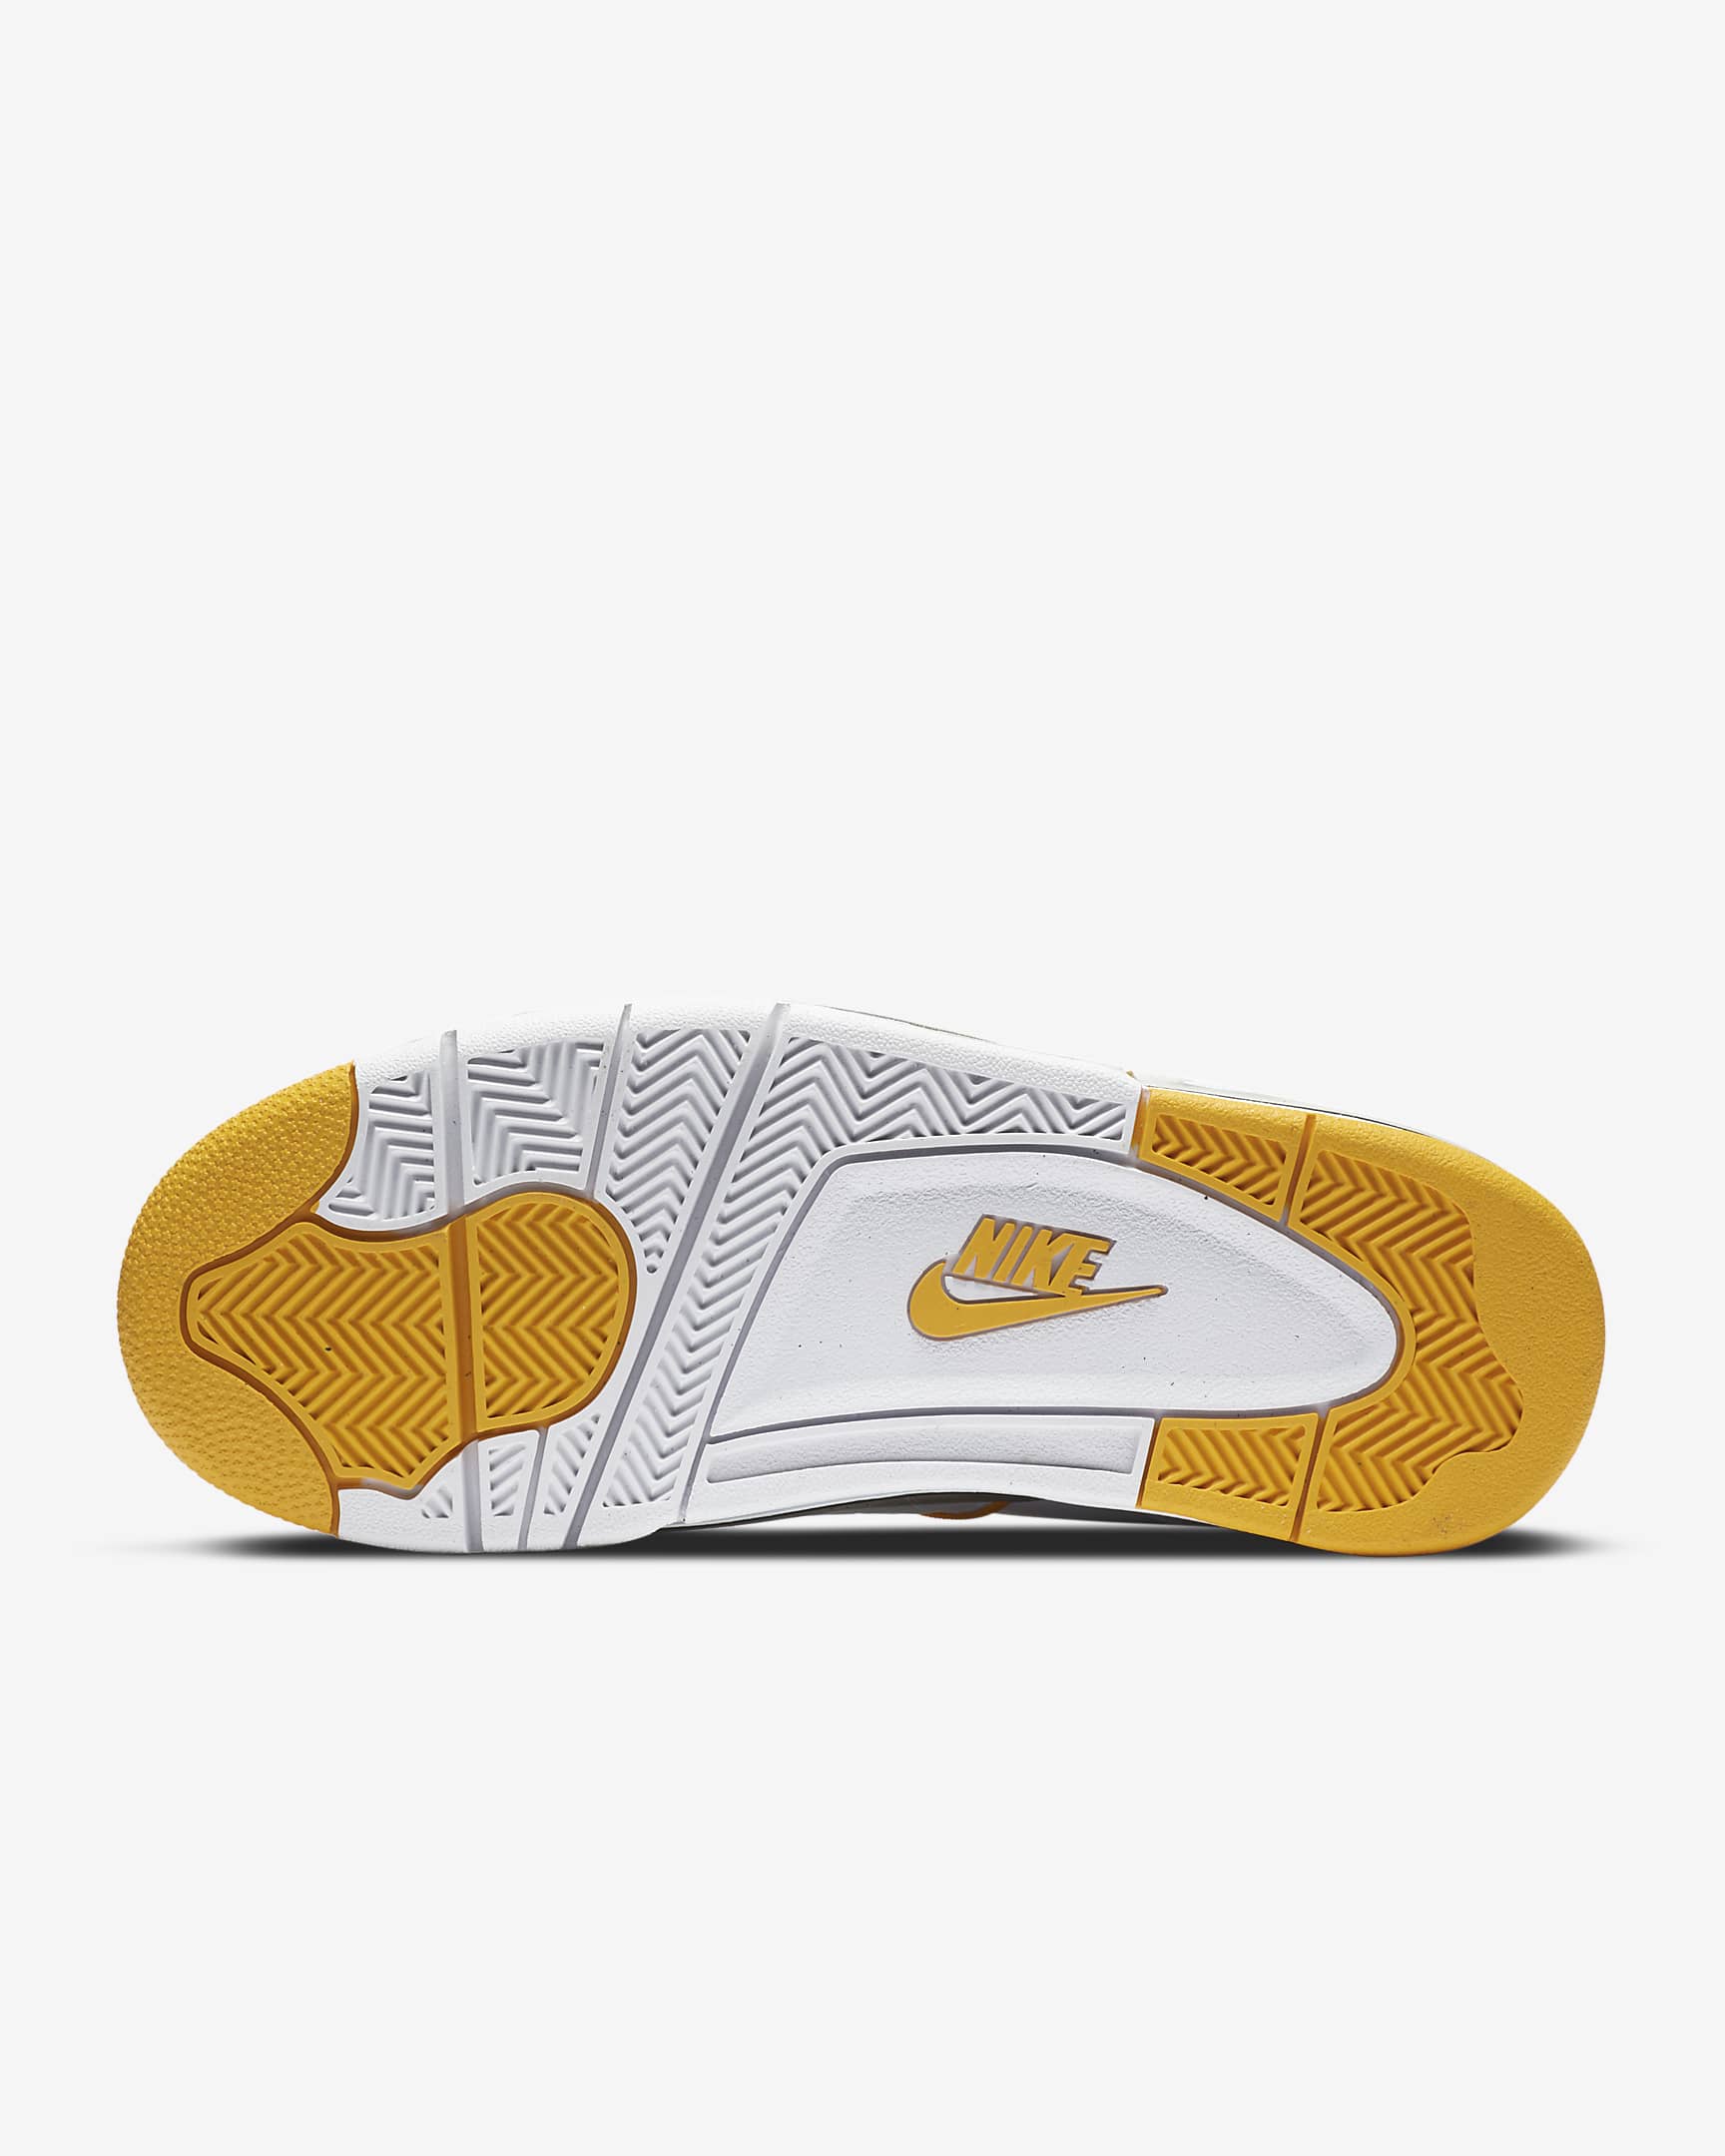 Nike Air Flight 89 Erkek Ayakkabısı - Beyaz/Fir/Siyah/Del Sol